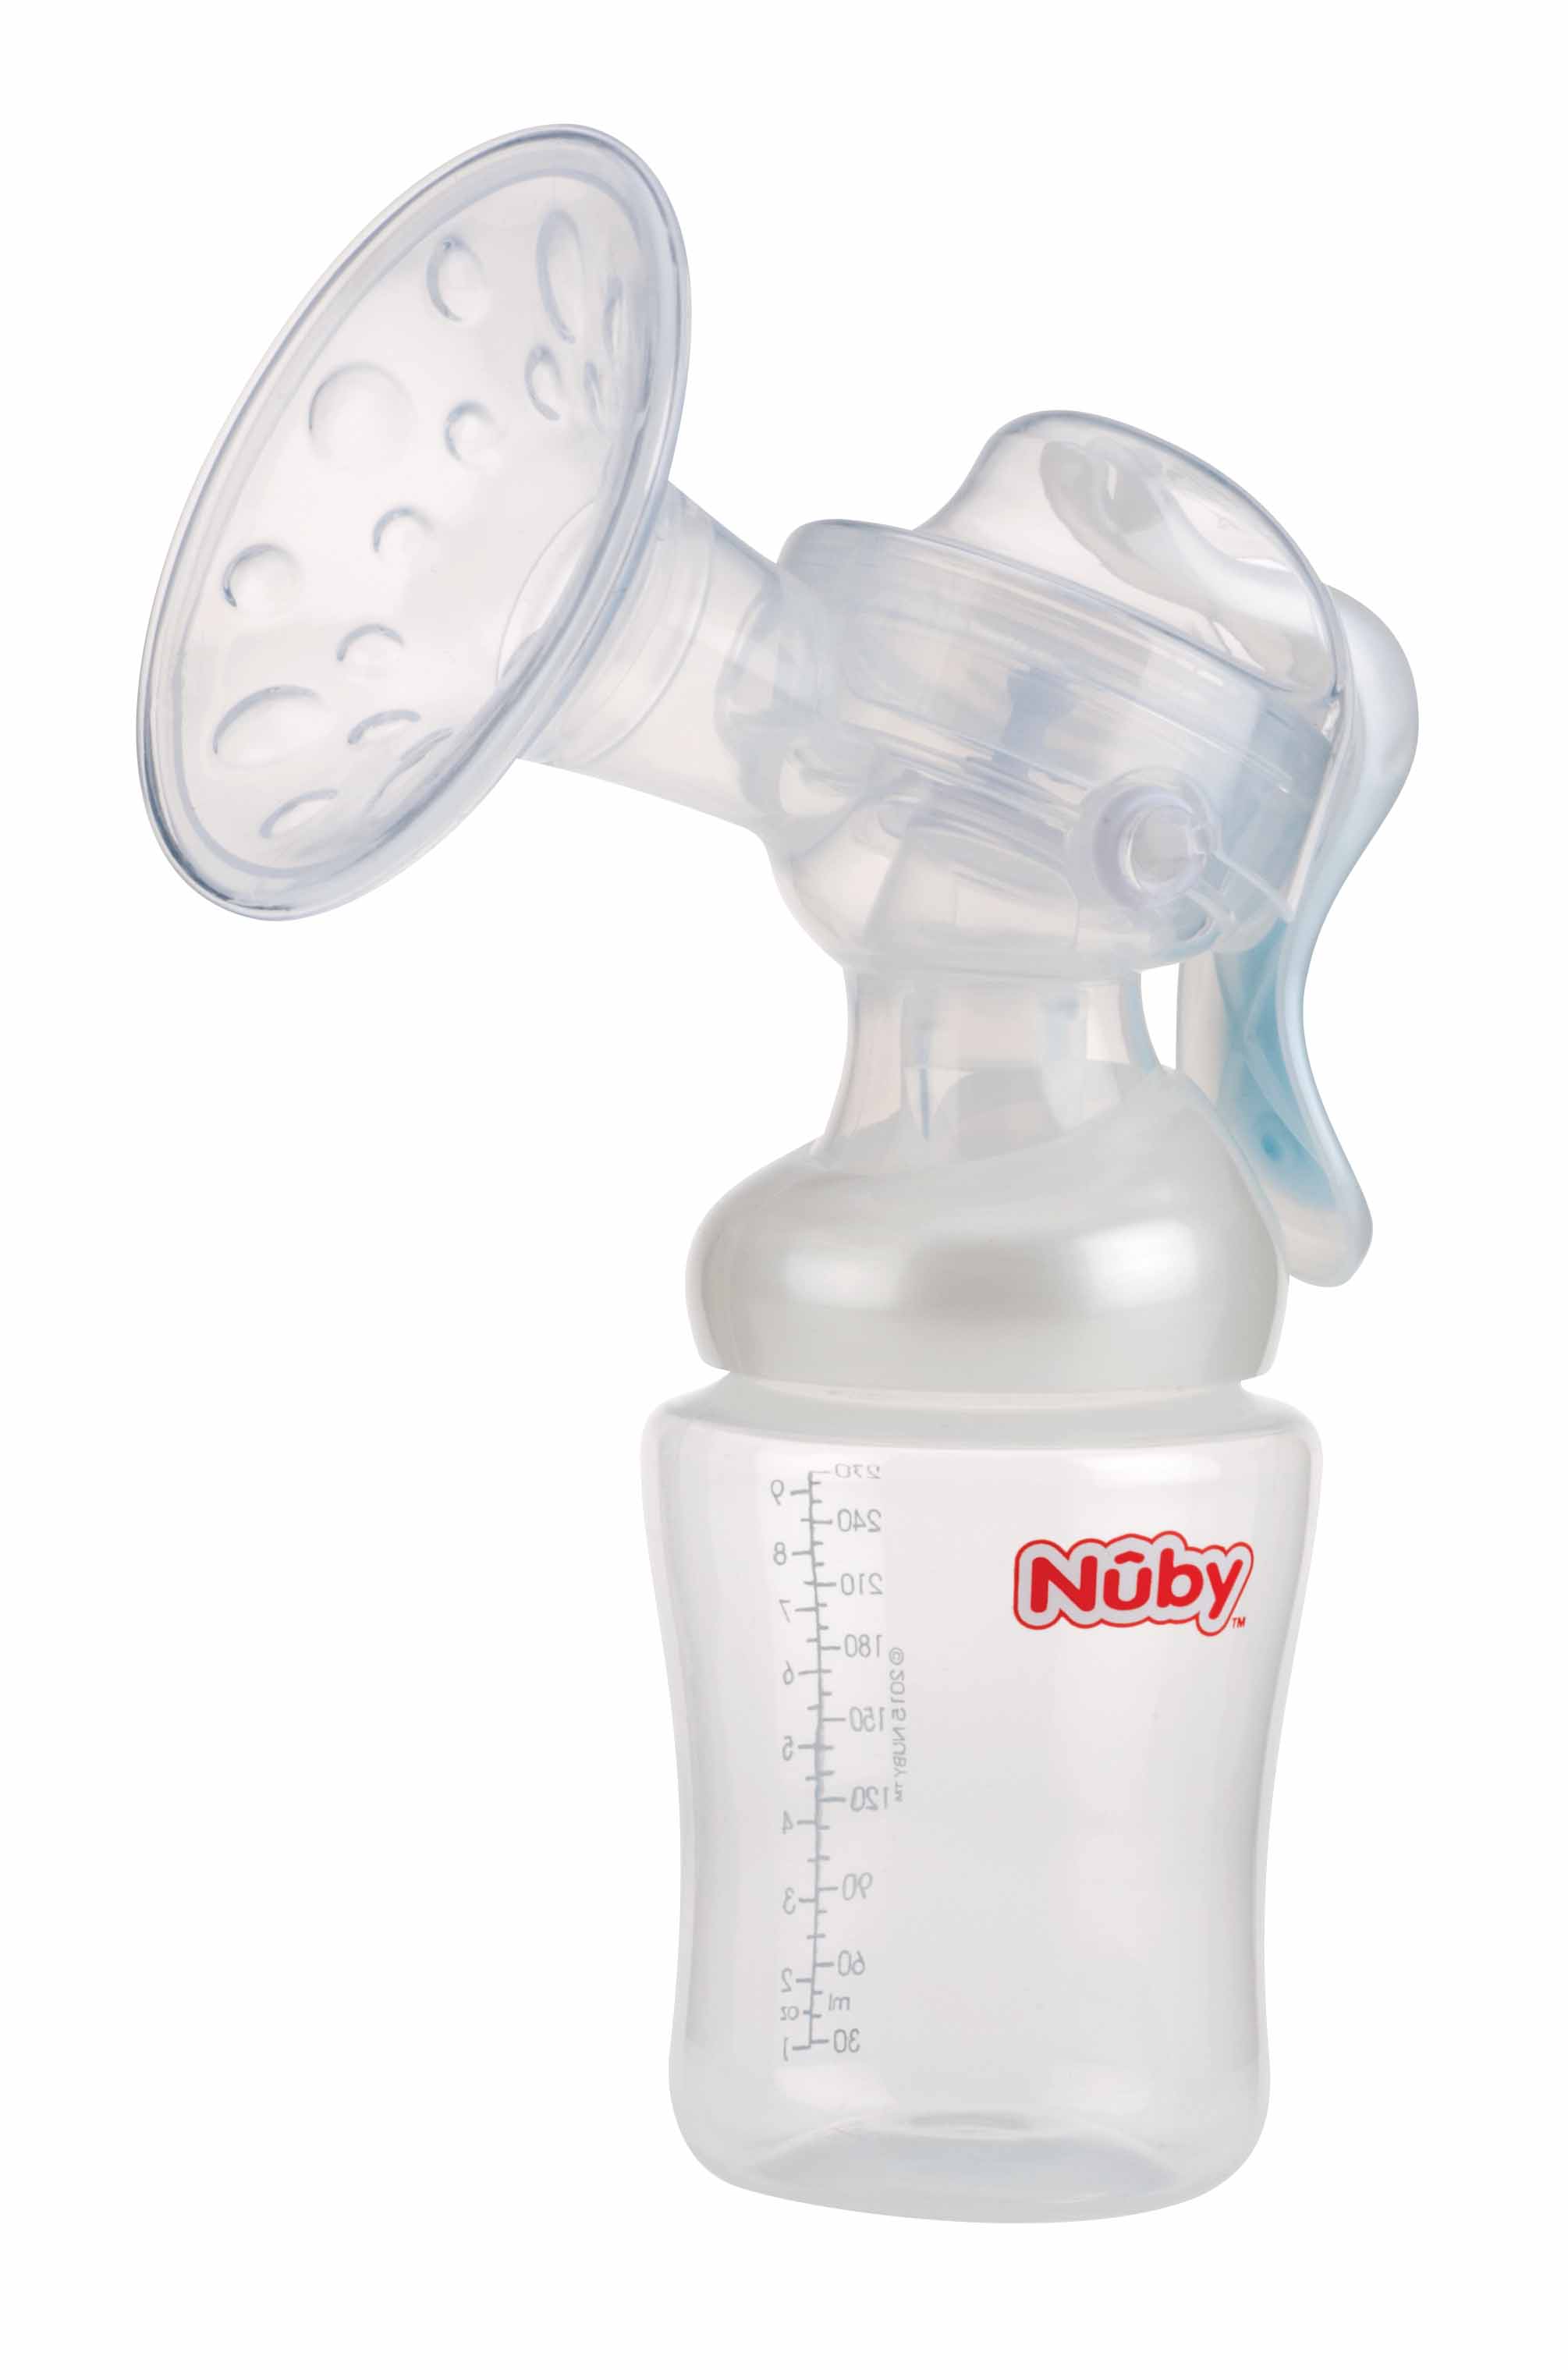 Nuby - Manual Breast Pump